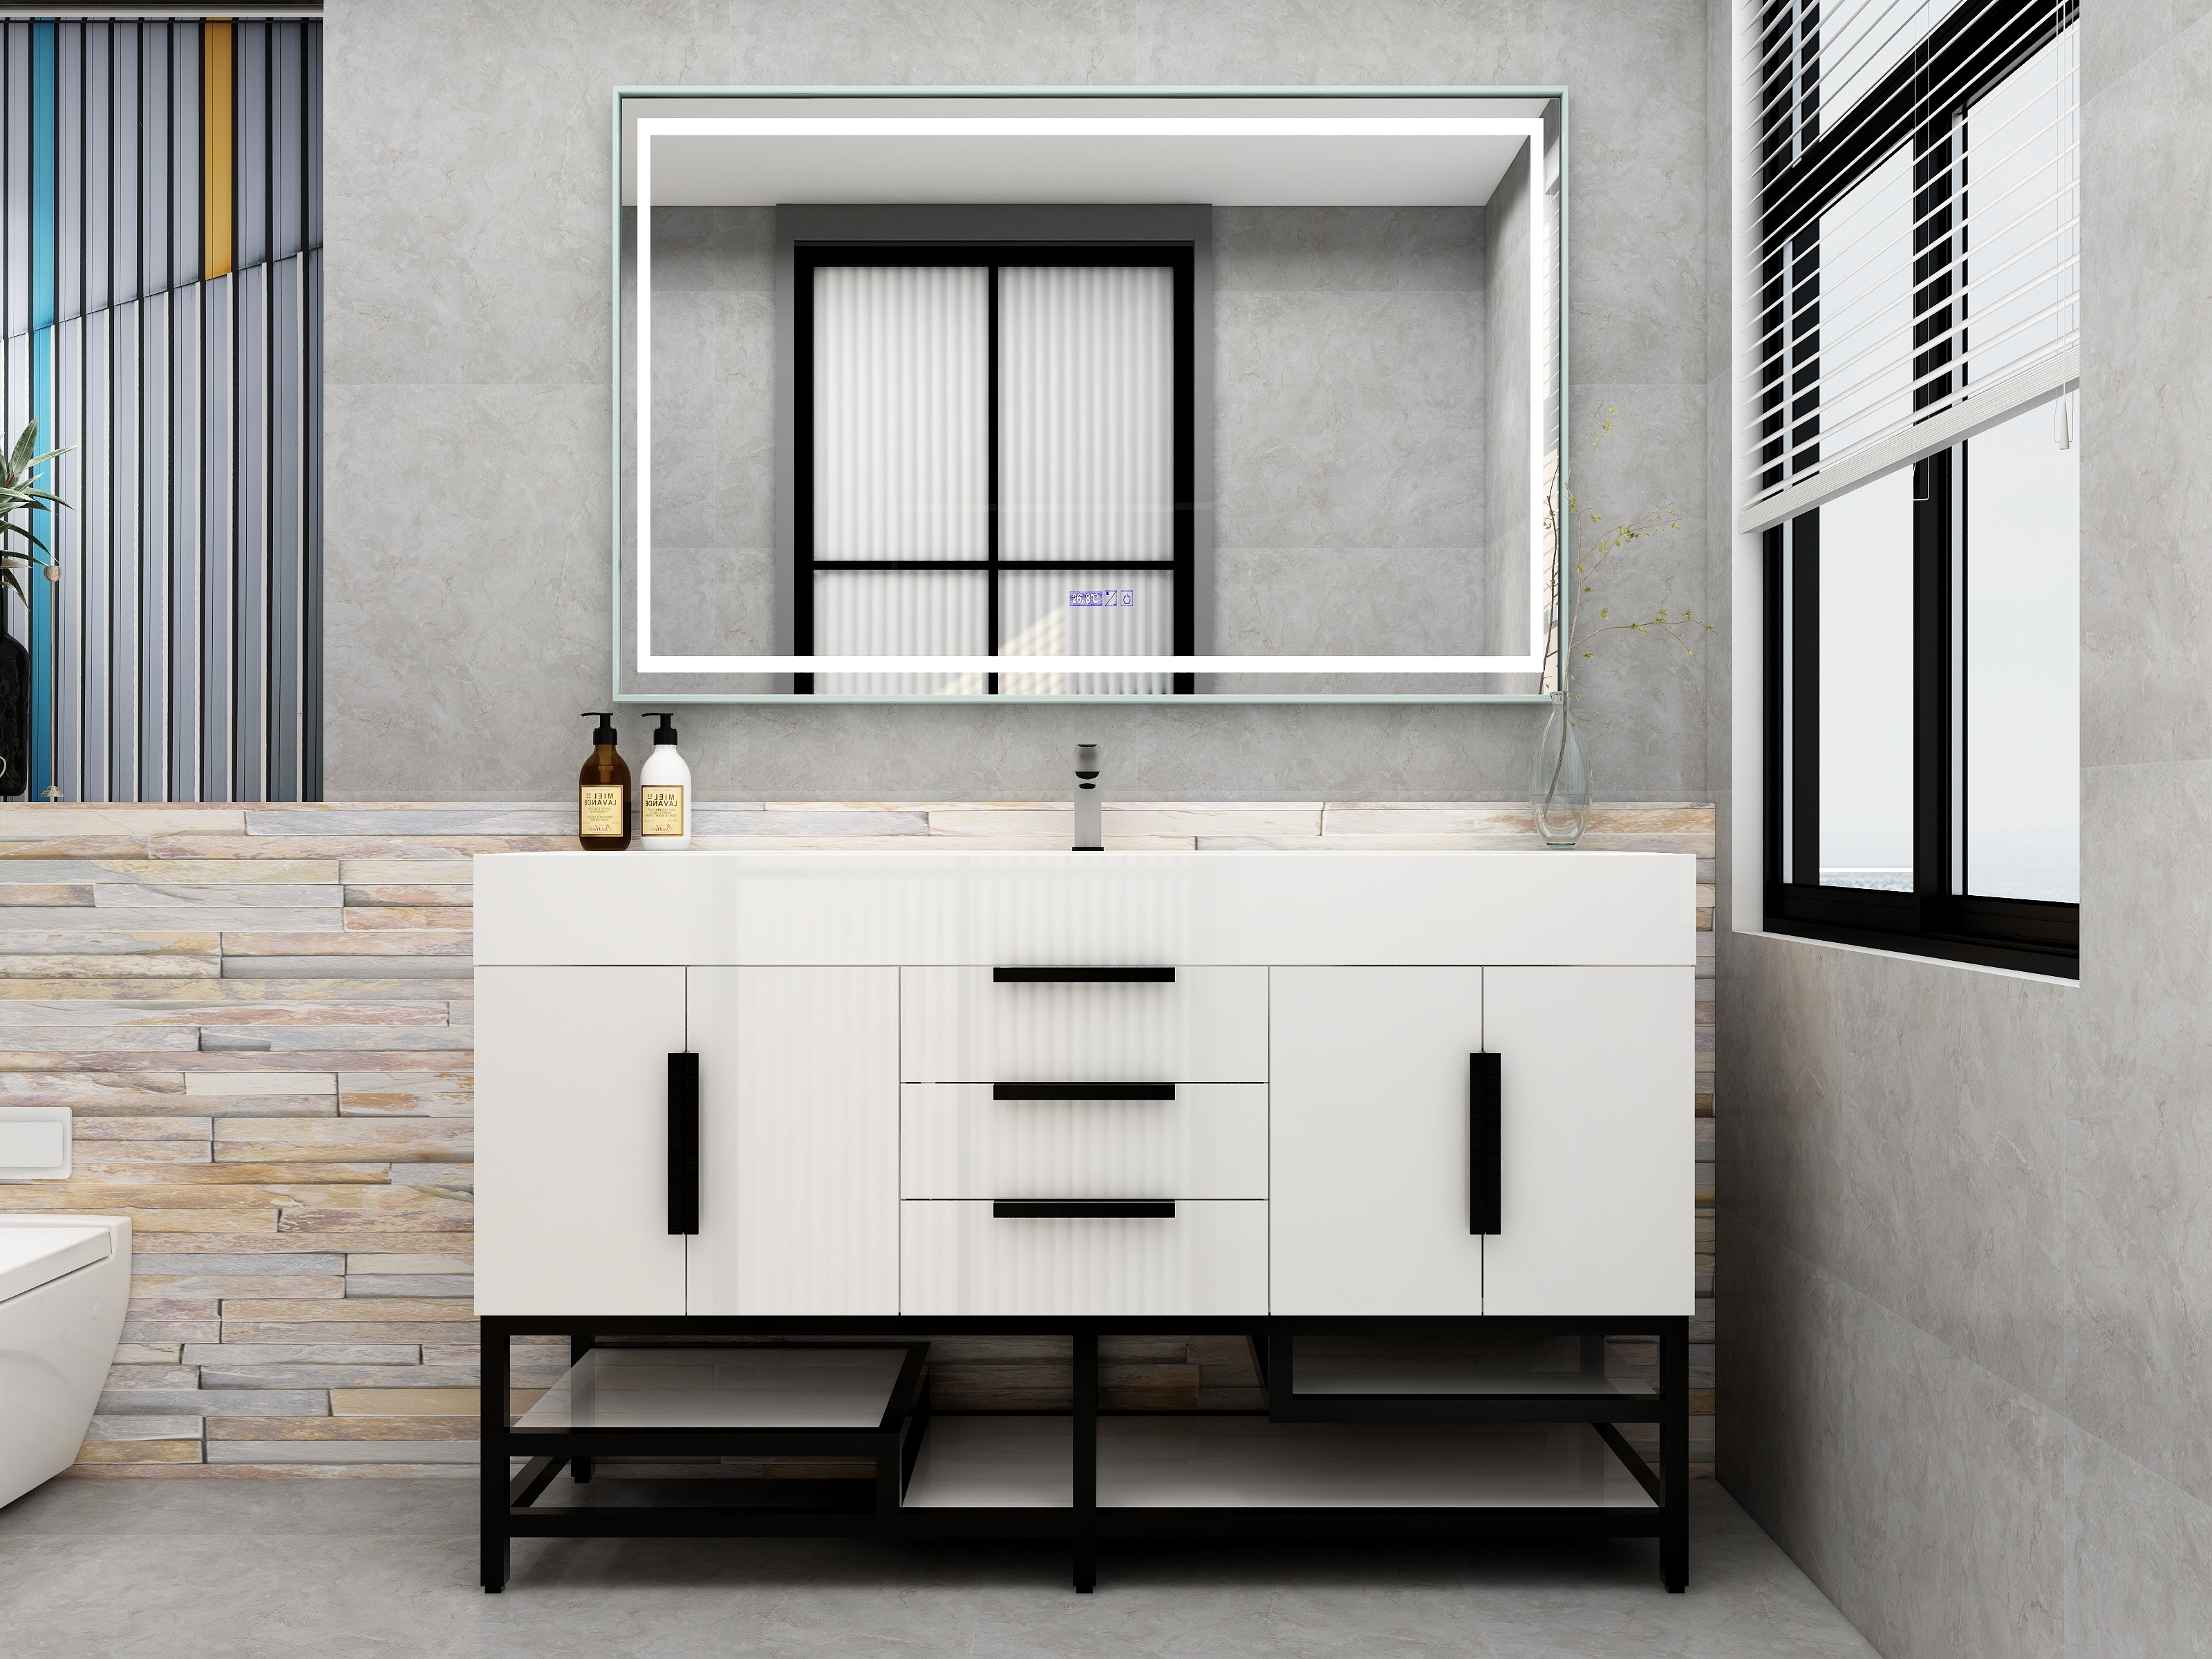 Bethany 60" Freestanding Bathroom Vanity with Reinforced Acrylic Sink in Gloss White with Black Handles | Better Vanity Bath Vanities